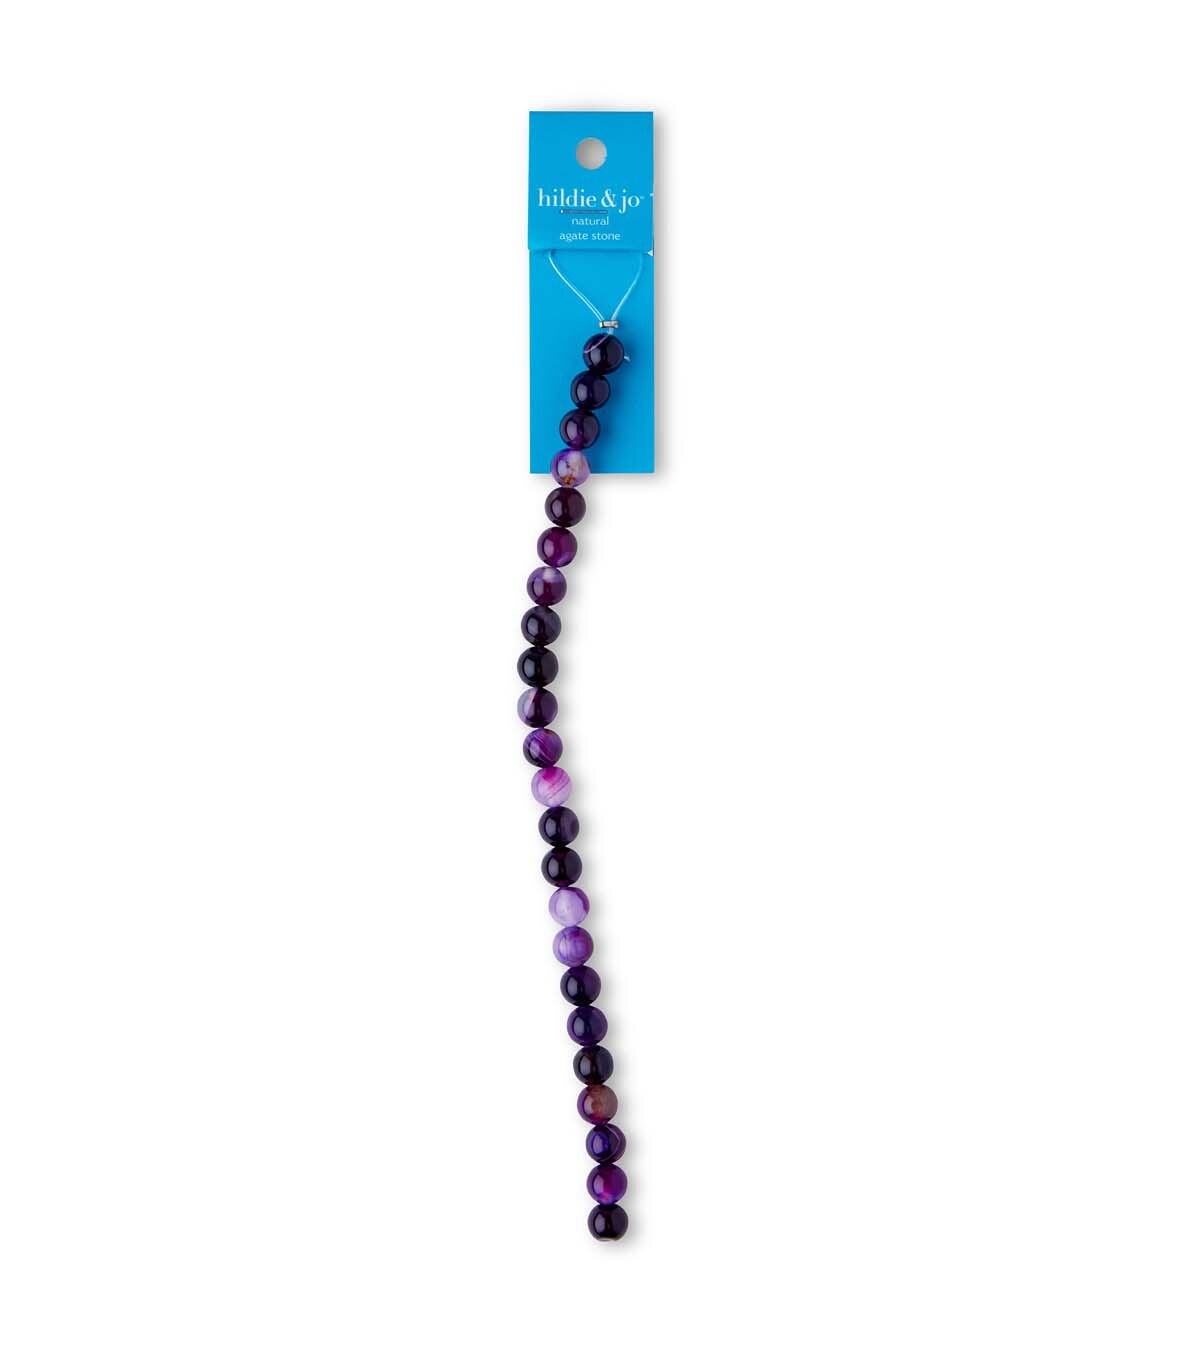 hildie & jo Round Natural Agate Stone Strung Beads-Purple Stripes ...